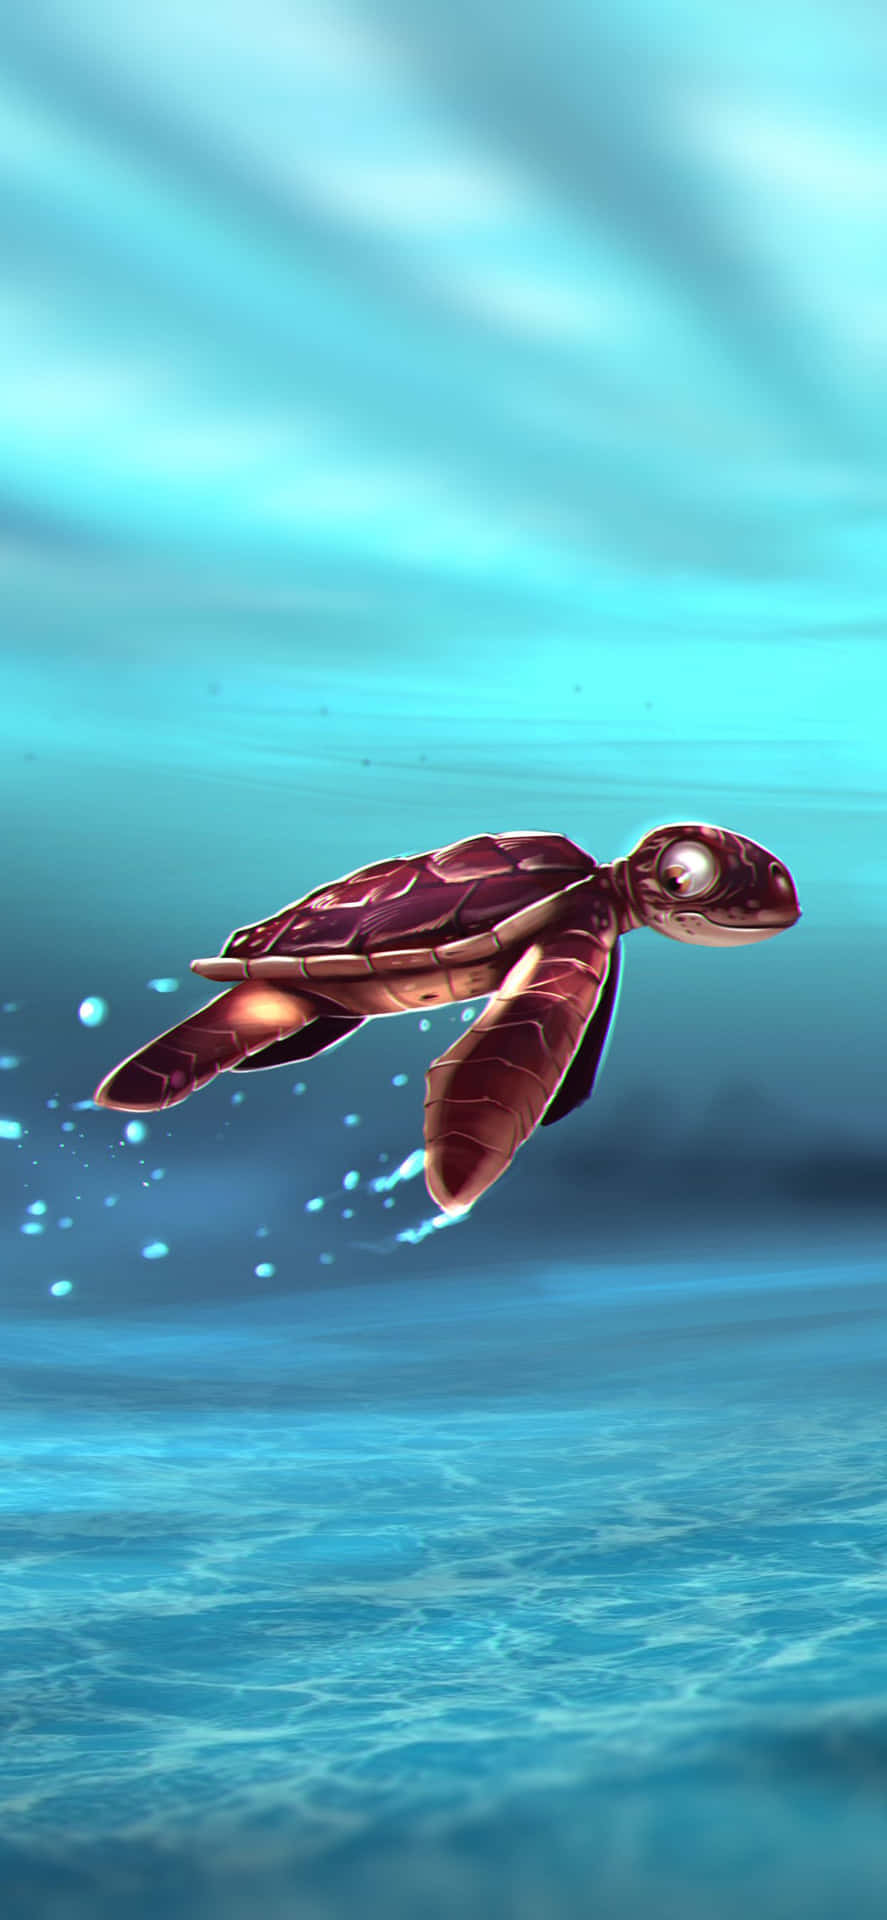 Majestic Sea Turtle Swimming In The Blue Ocean